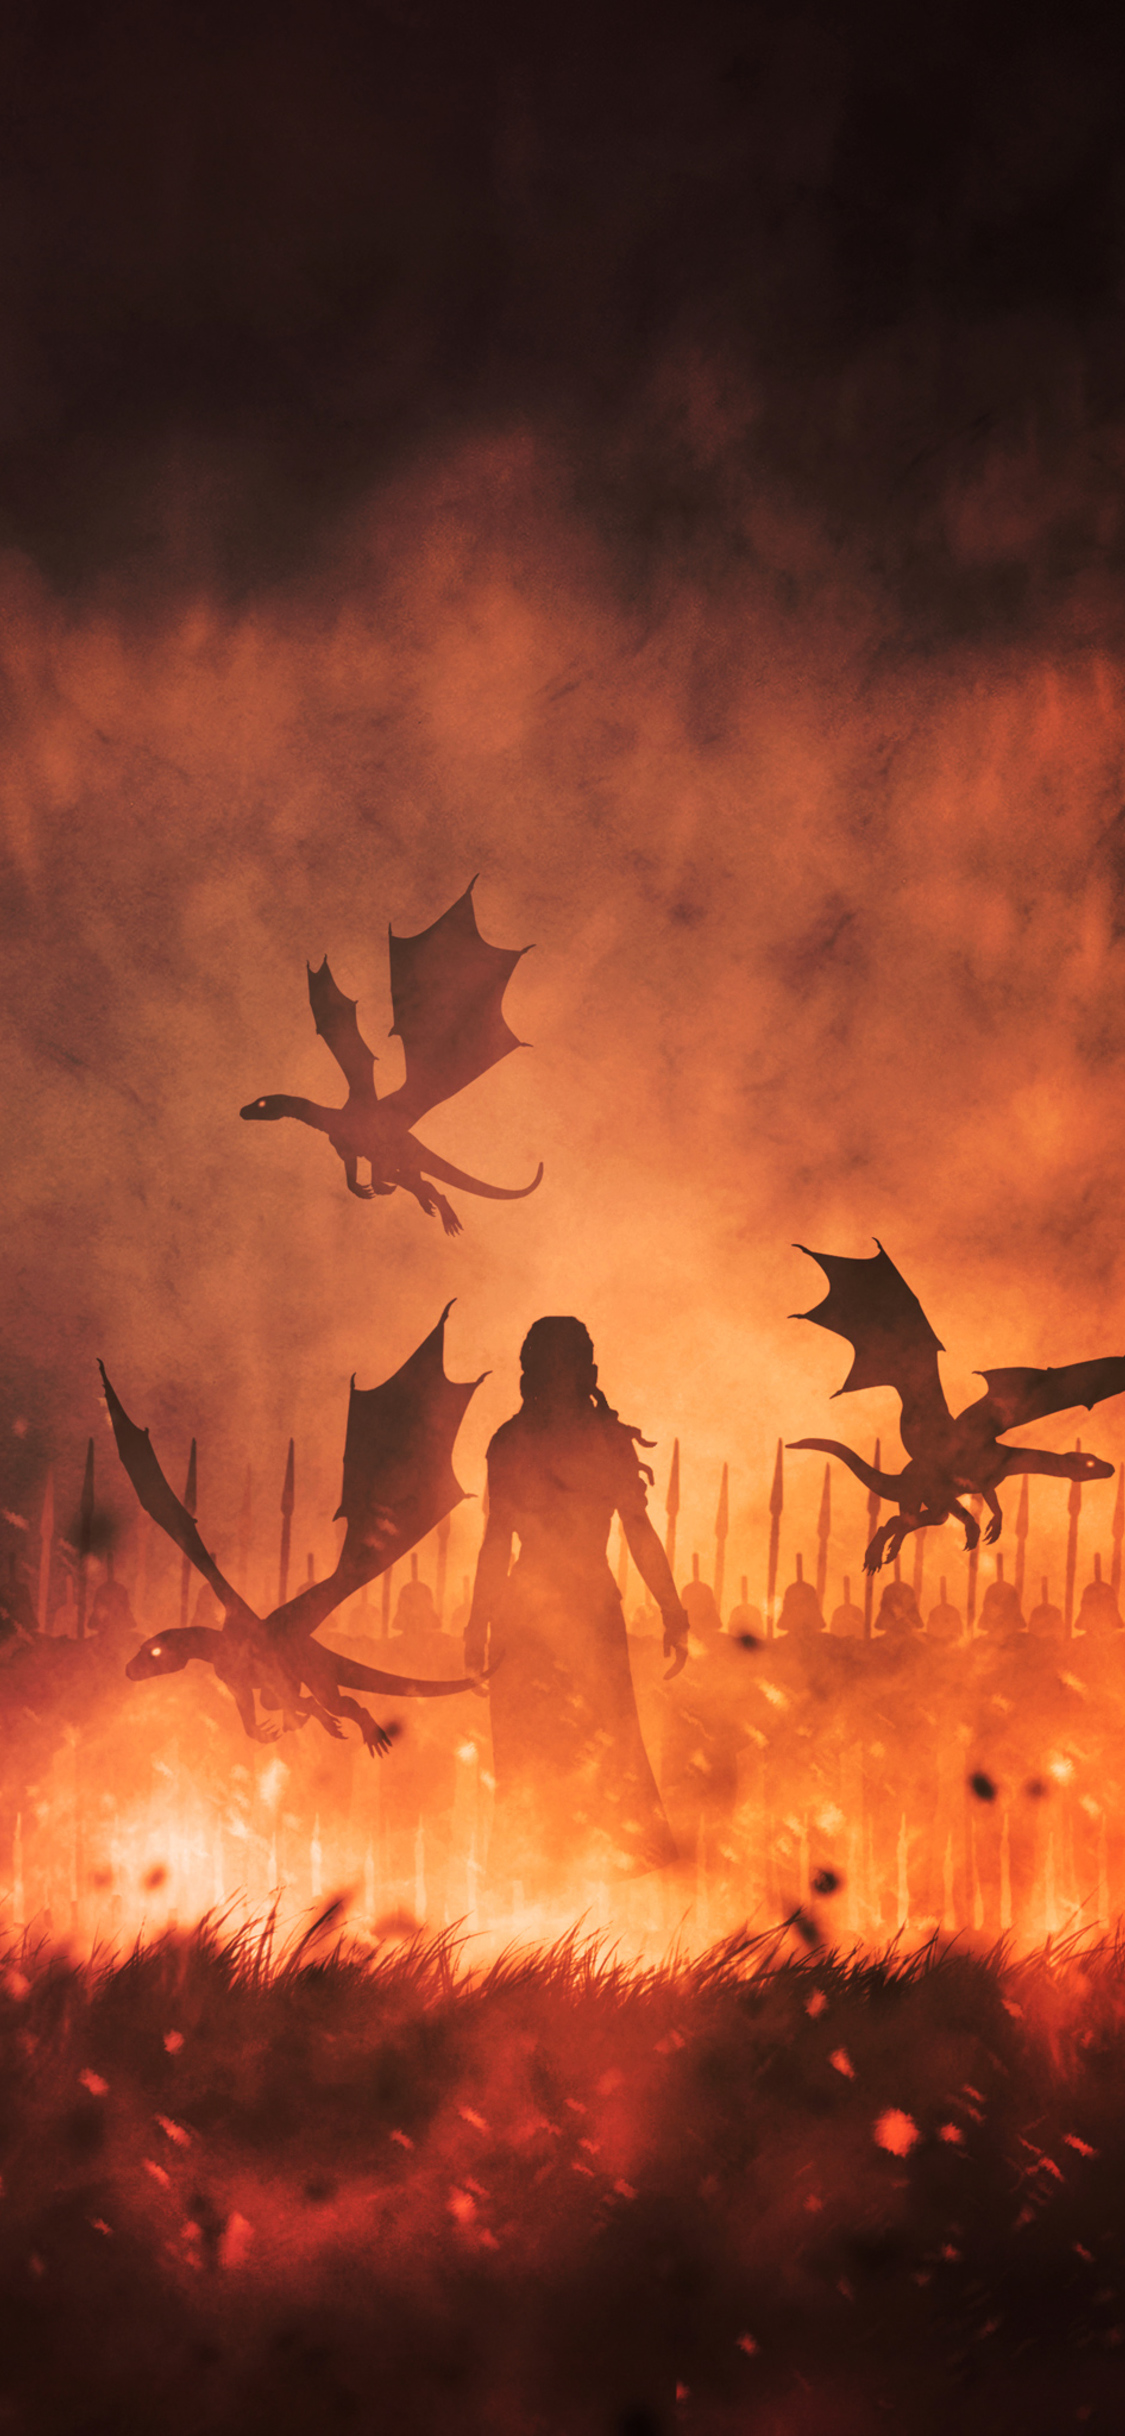 daenerys-targaryen-with-dragons-illustration-d5-1125x2436 iPhone game of thrones wallpaper